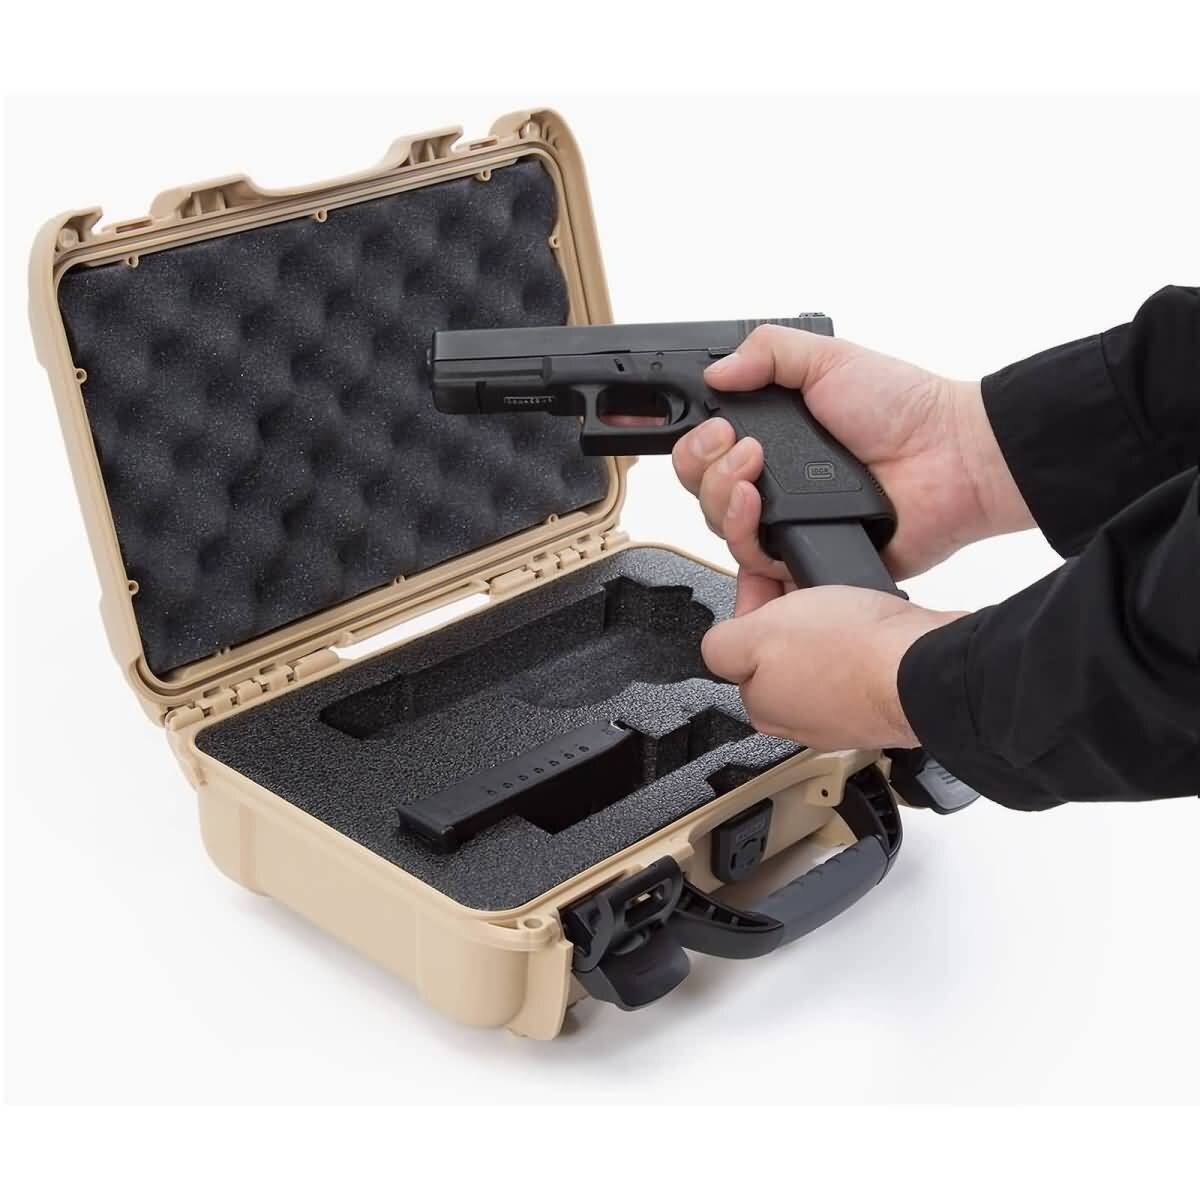 https://www.nanuk-koffer.com/media/image/product/36303/lg/nanuk-cases-pistolen-koffer-909-1-glock-pistole-in-verschiedenen-farben~11.jpg